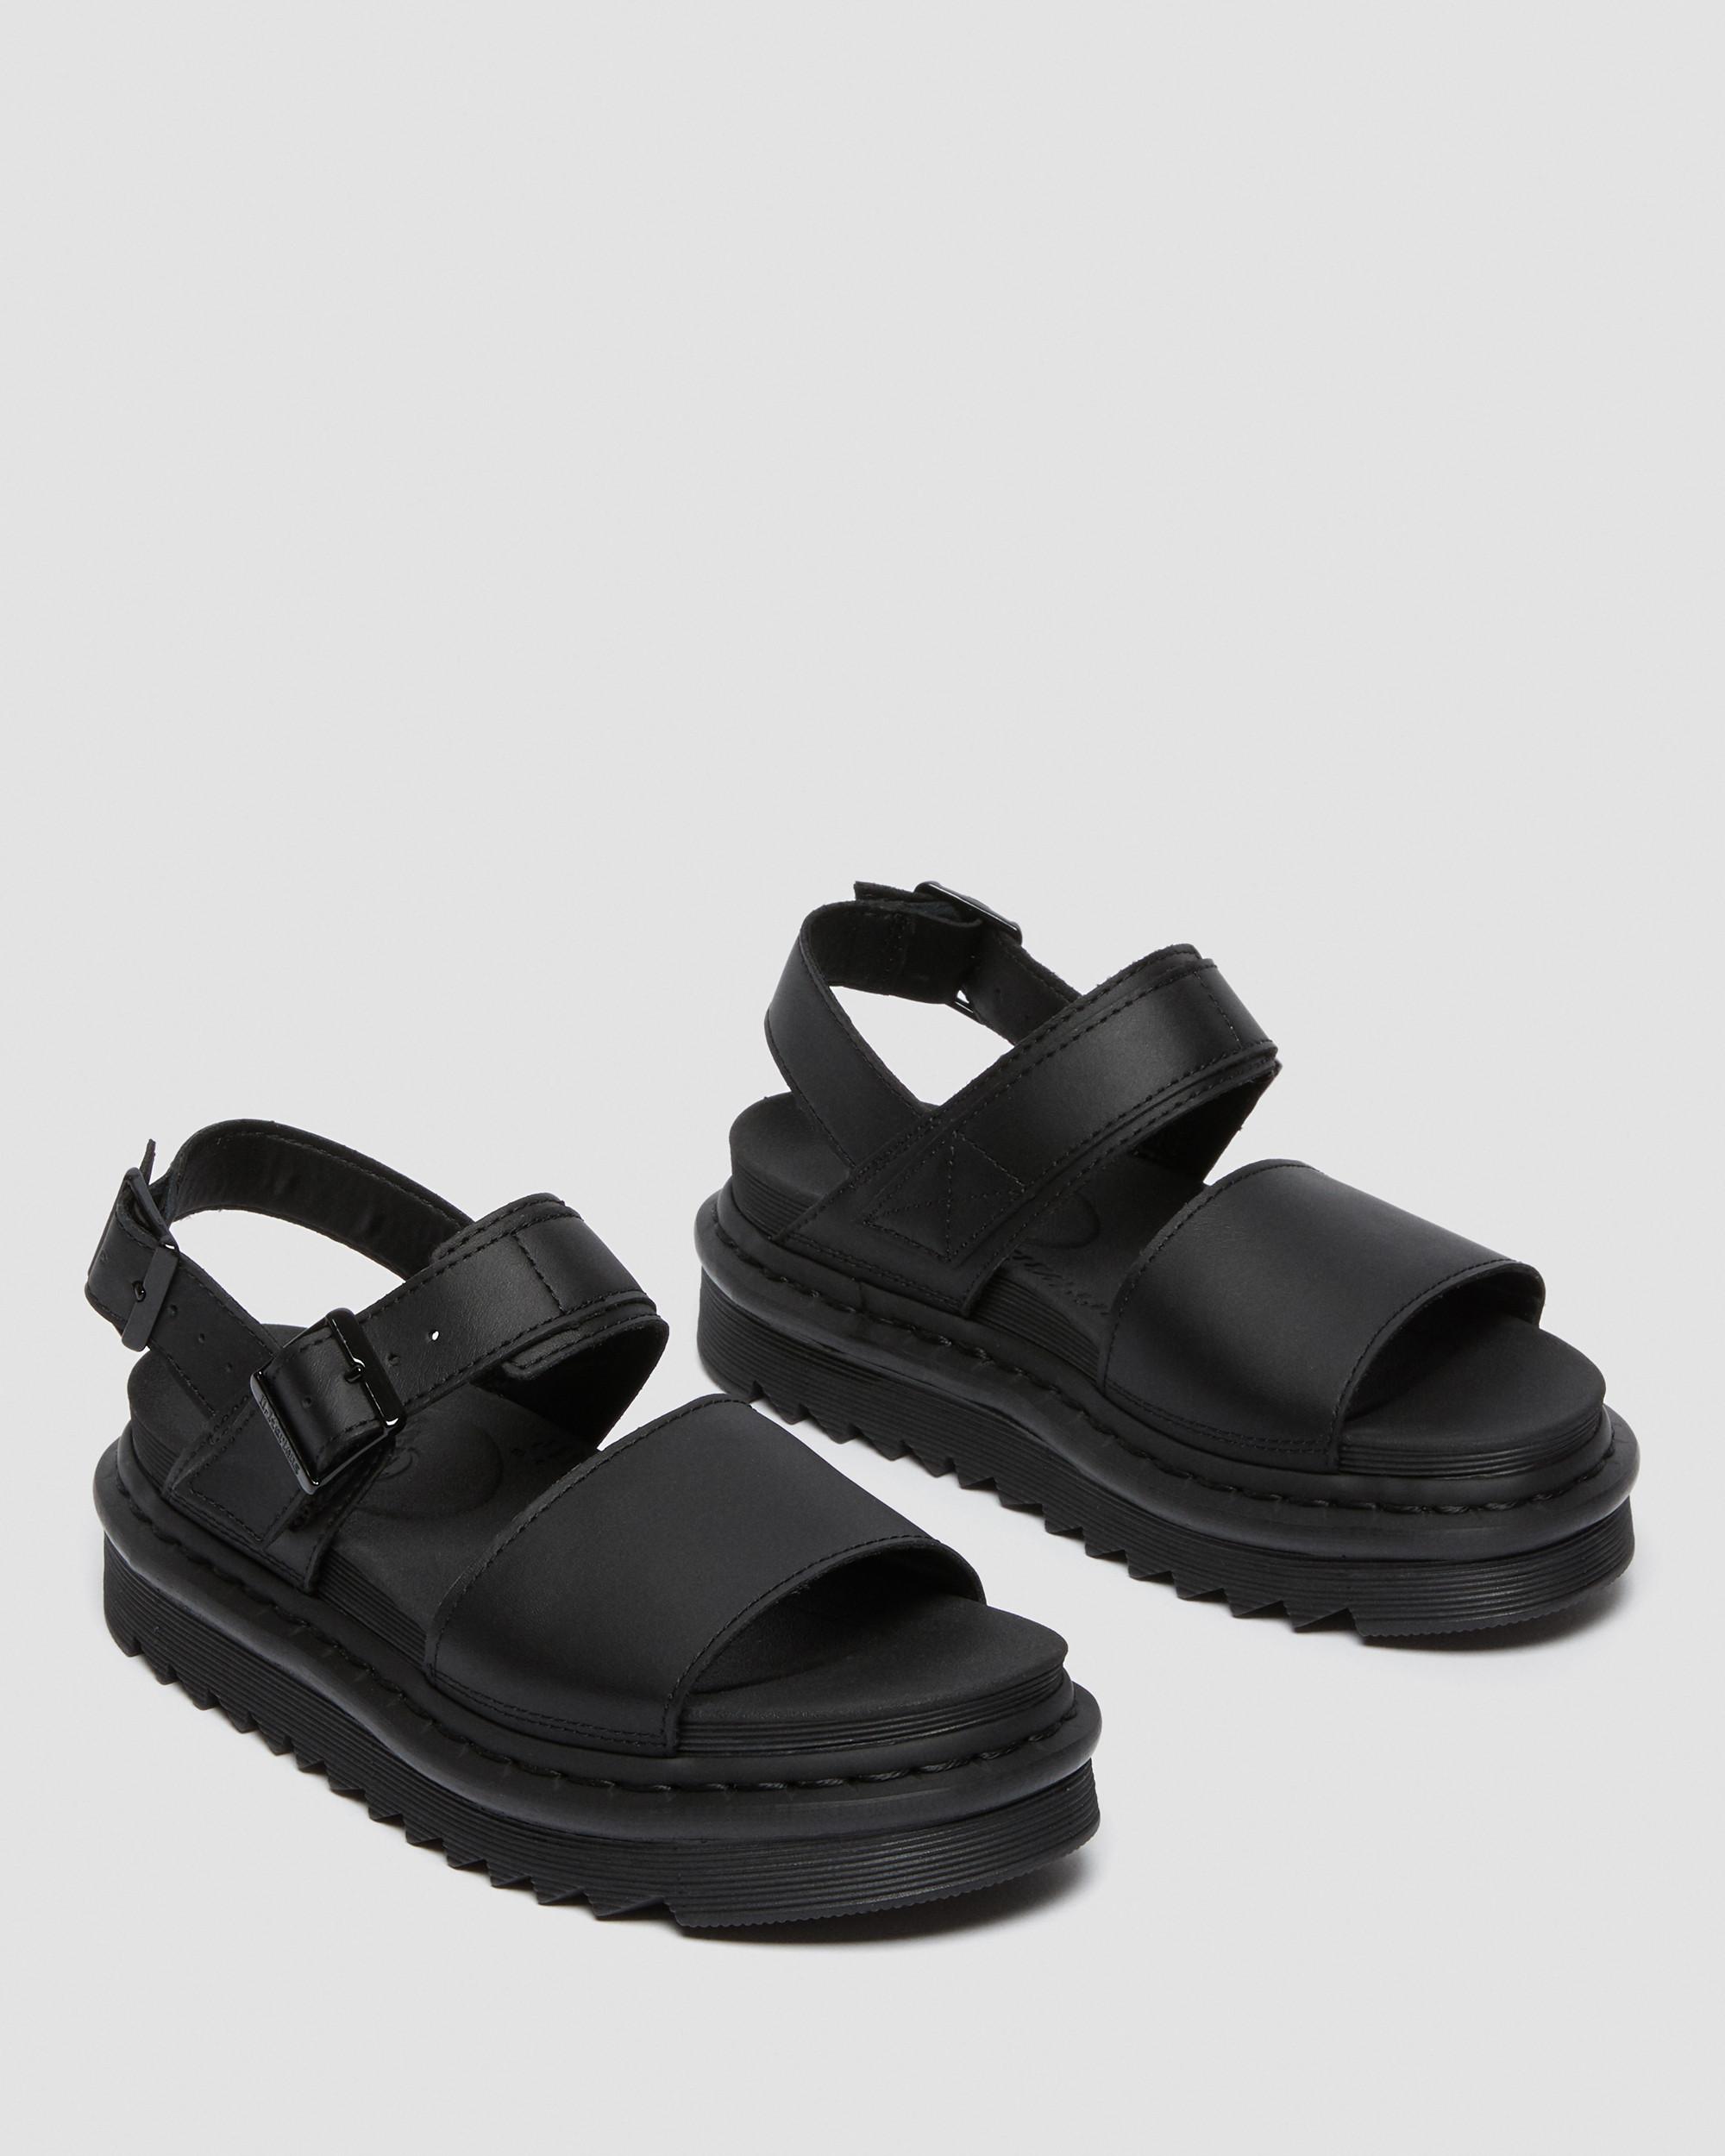 Buy > dr martens sandals very > in stock